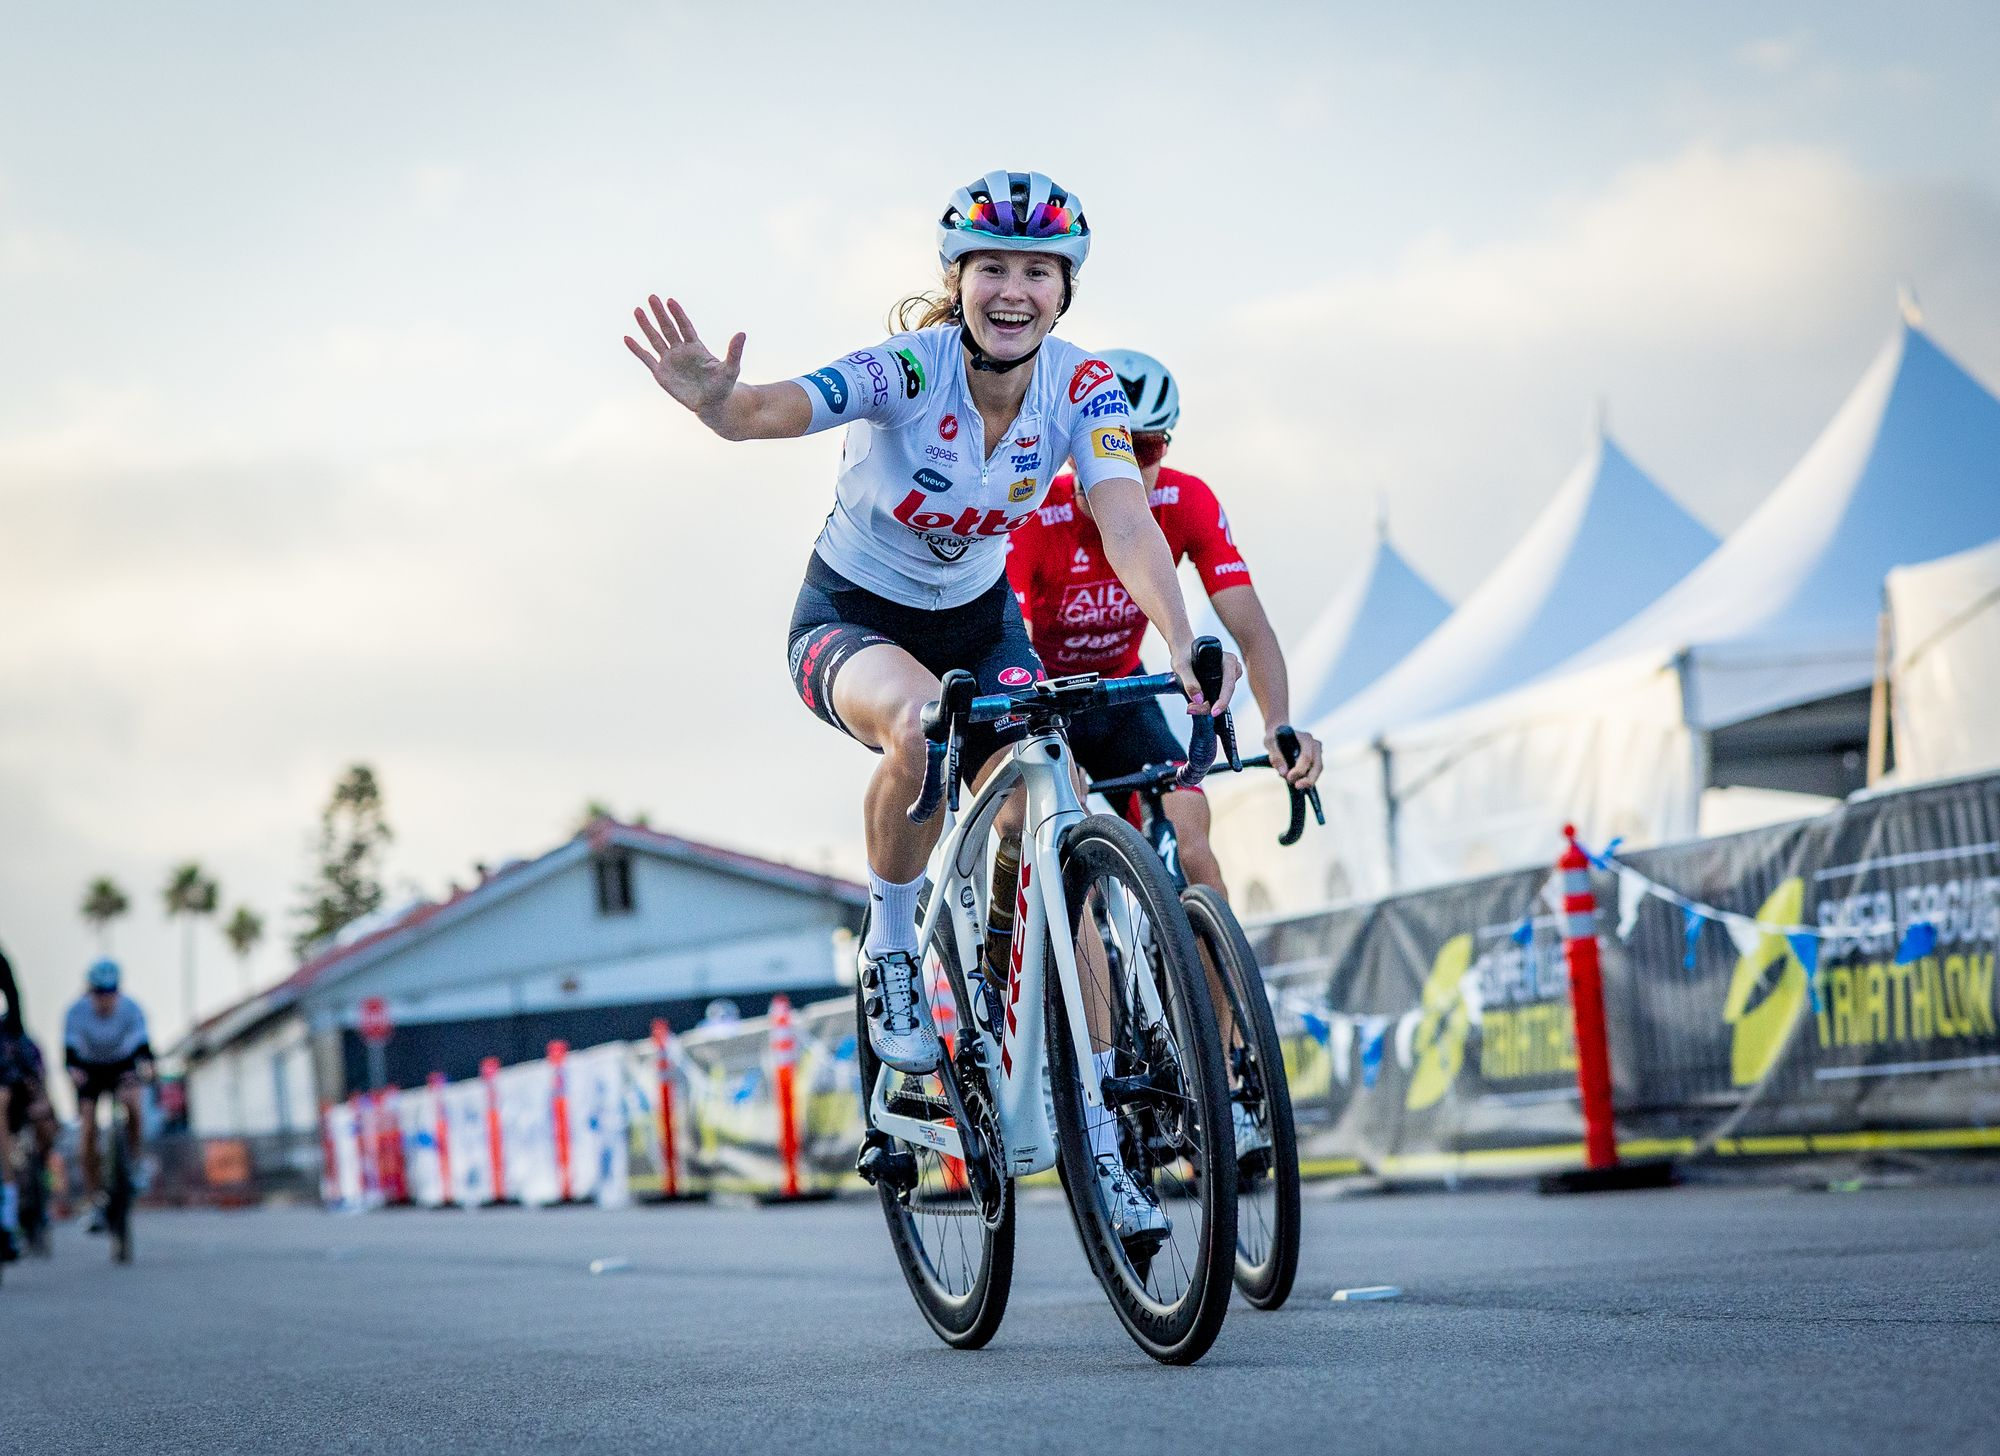 ROUVY Ambassador Hanne de Vet waving and smiling while riding her Trek bike